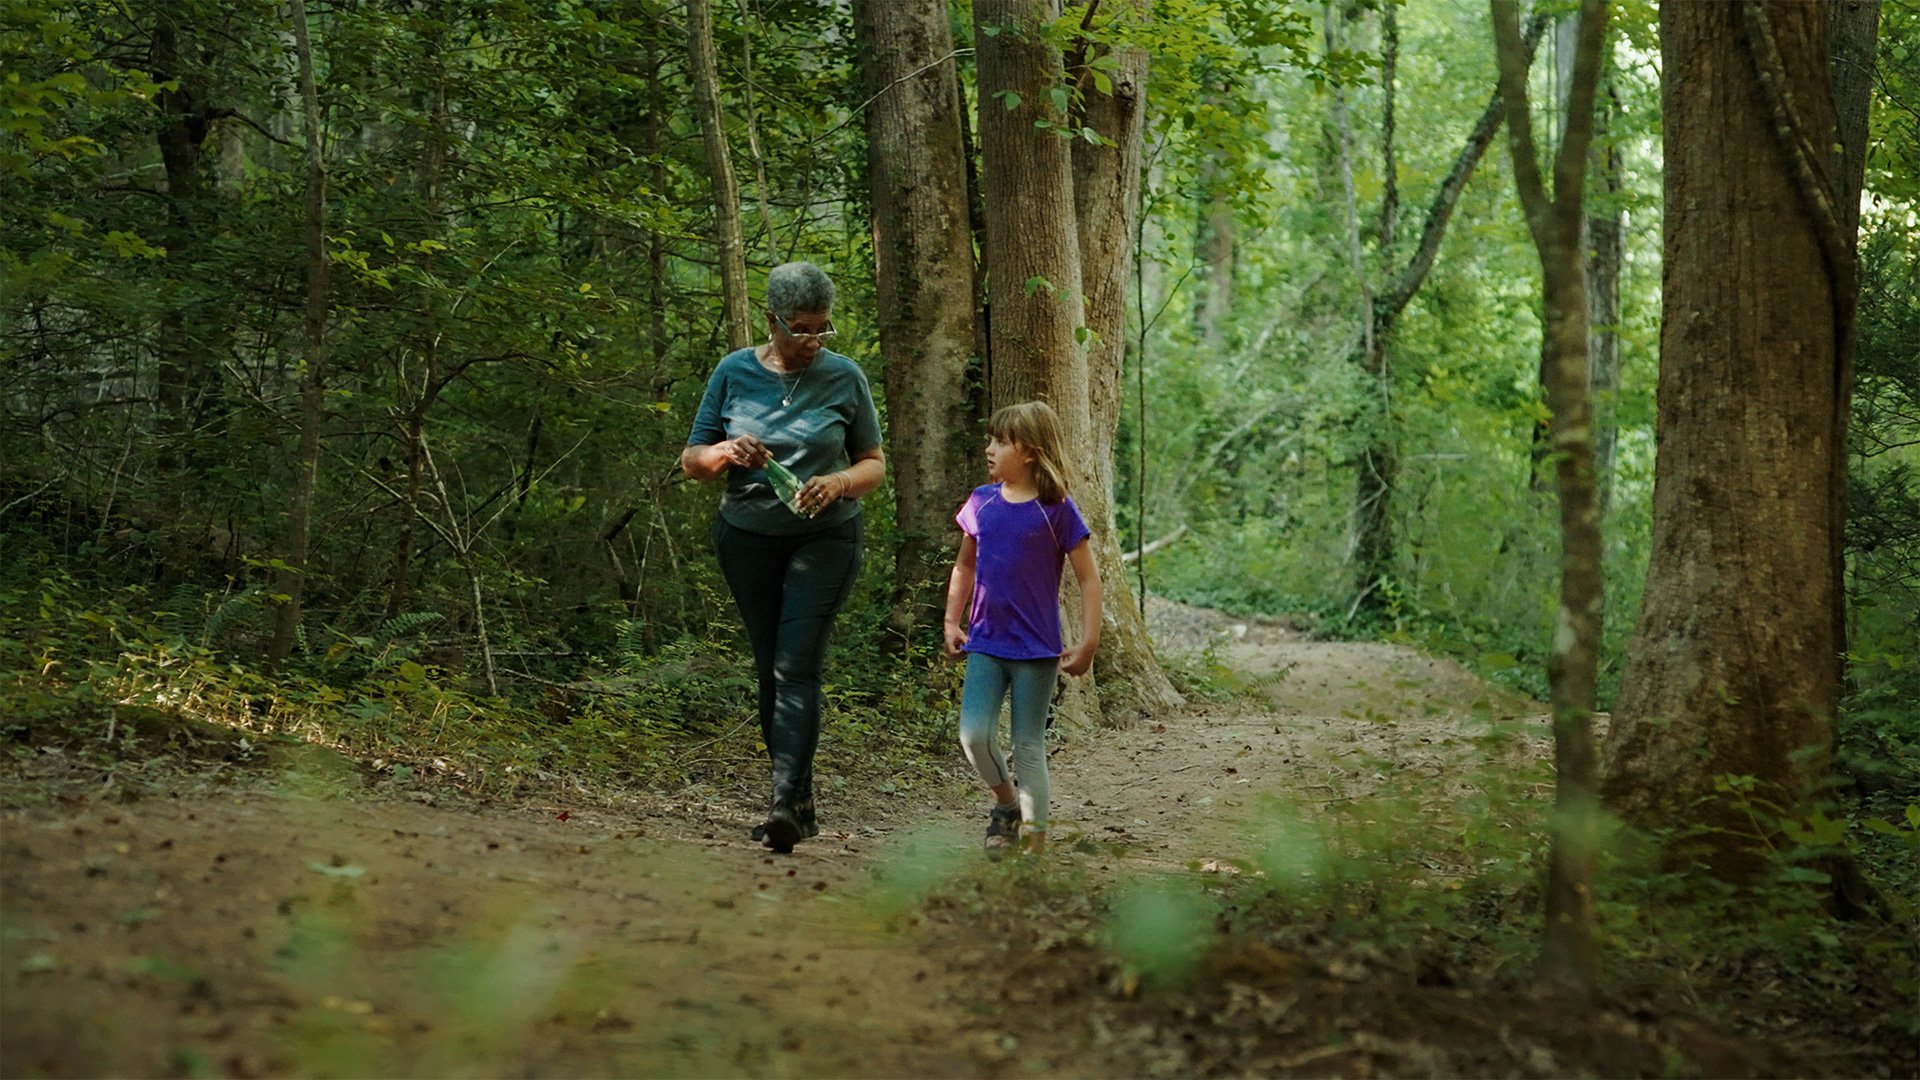 Stephanie Swepson Twitty walks along a section of trail with Eva Jennings, daughter of U.S. Forest Service employee Lisa Jennings. (Photo courtesy of White Blaze Marketing)